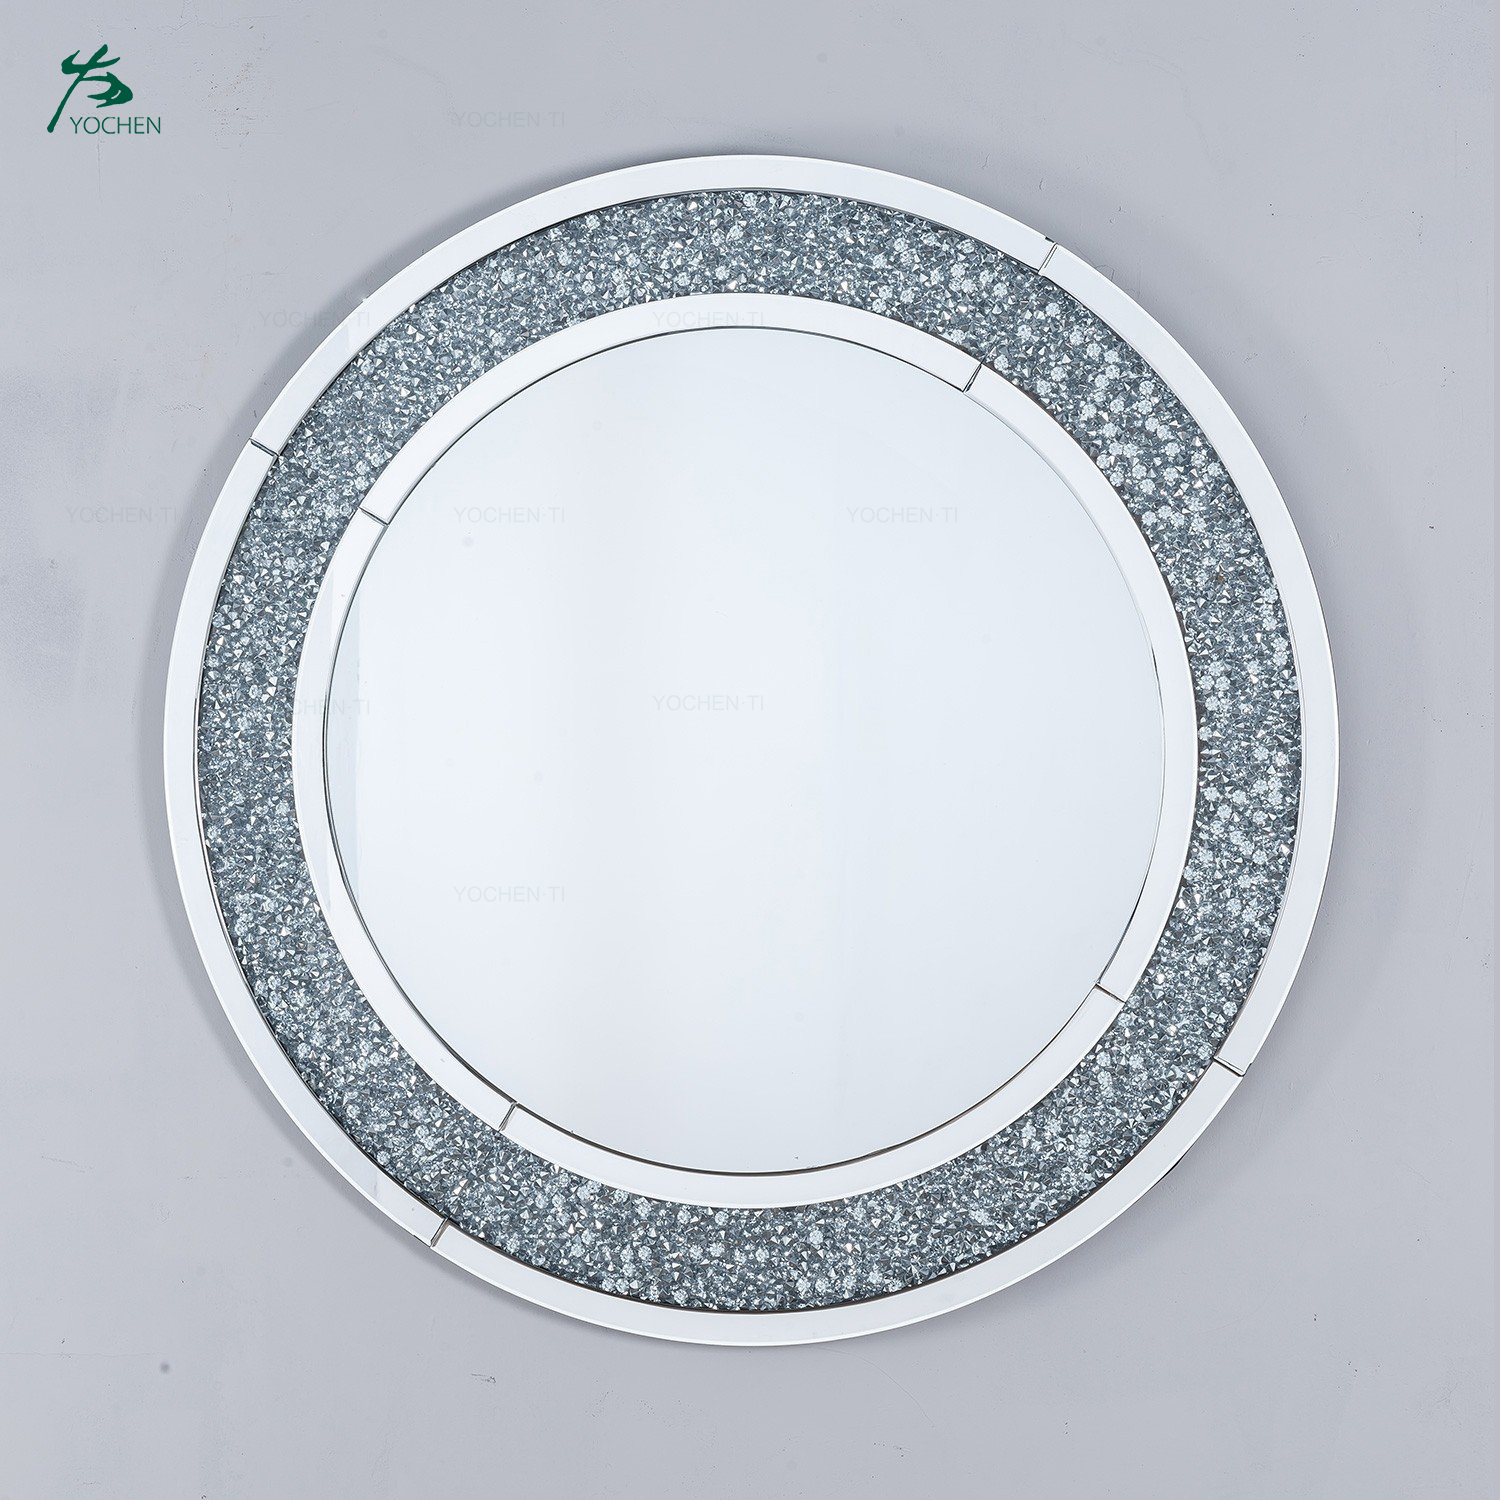 Heart Shaped Wall Mirror Silver Diamond Crush Mirror